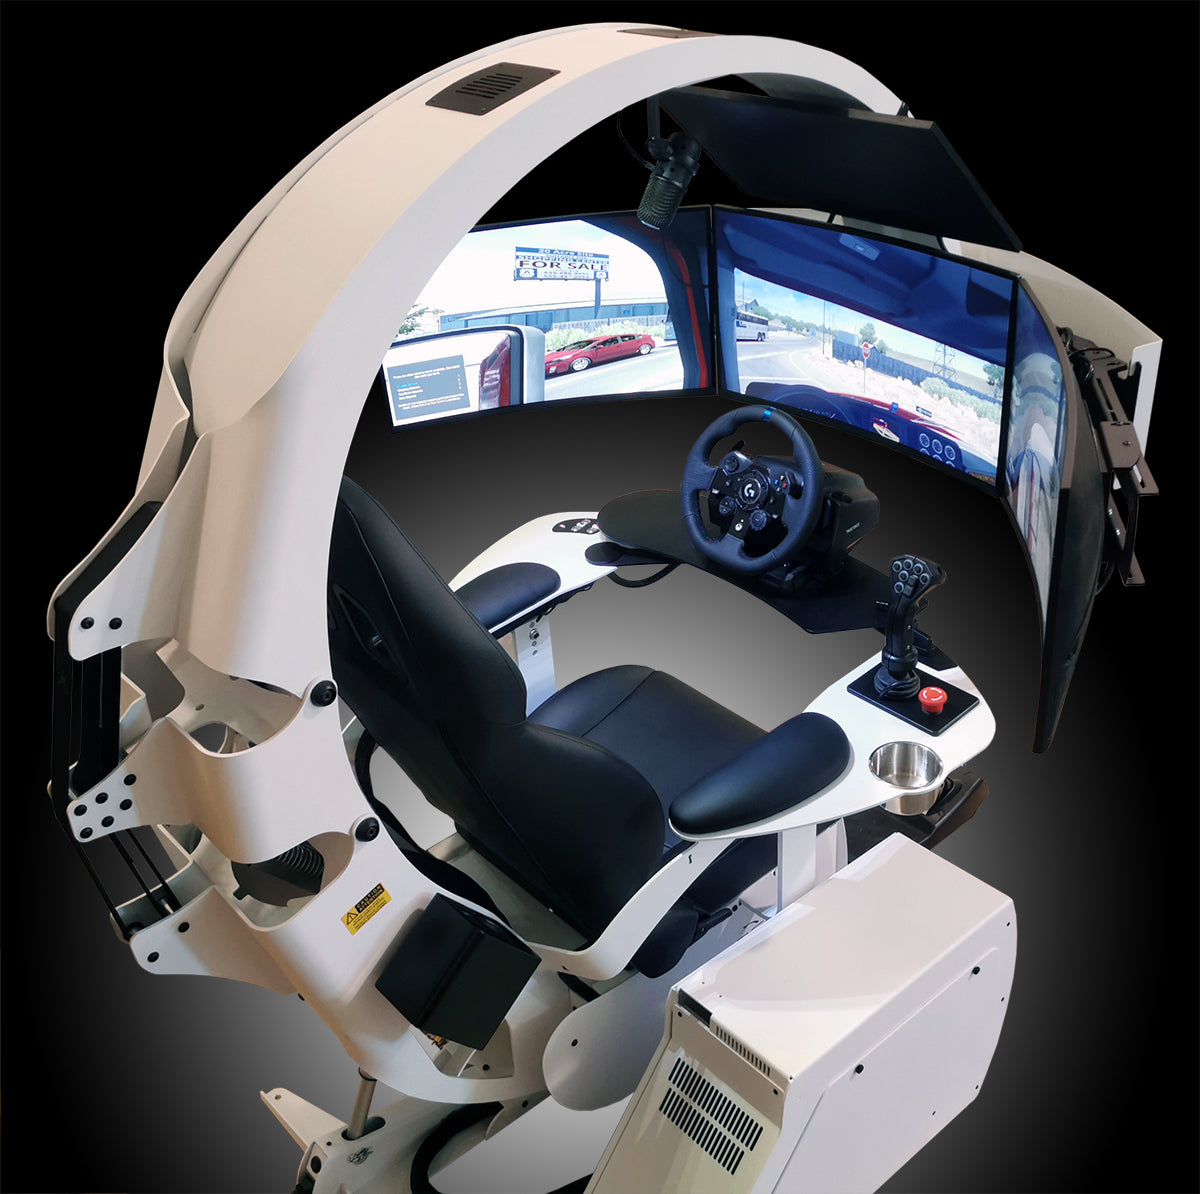 White Emperor XT with controllers for autonomous vehicles